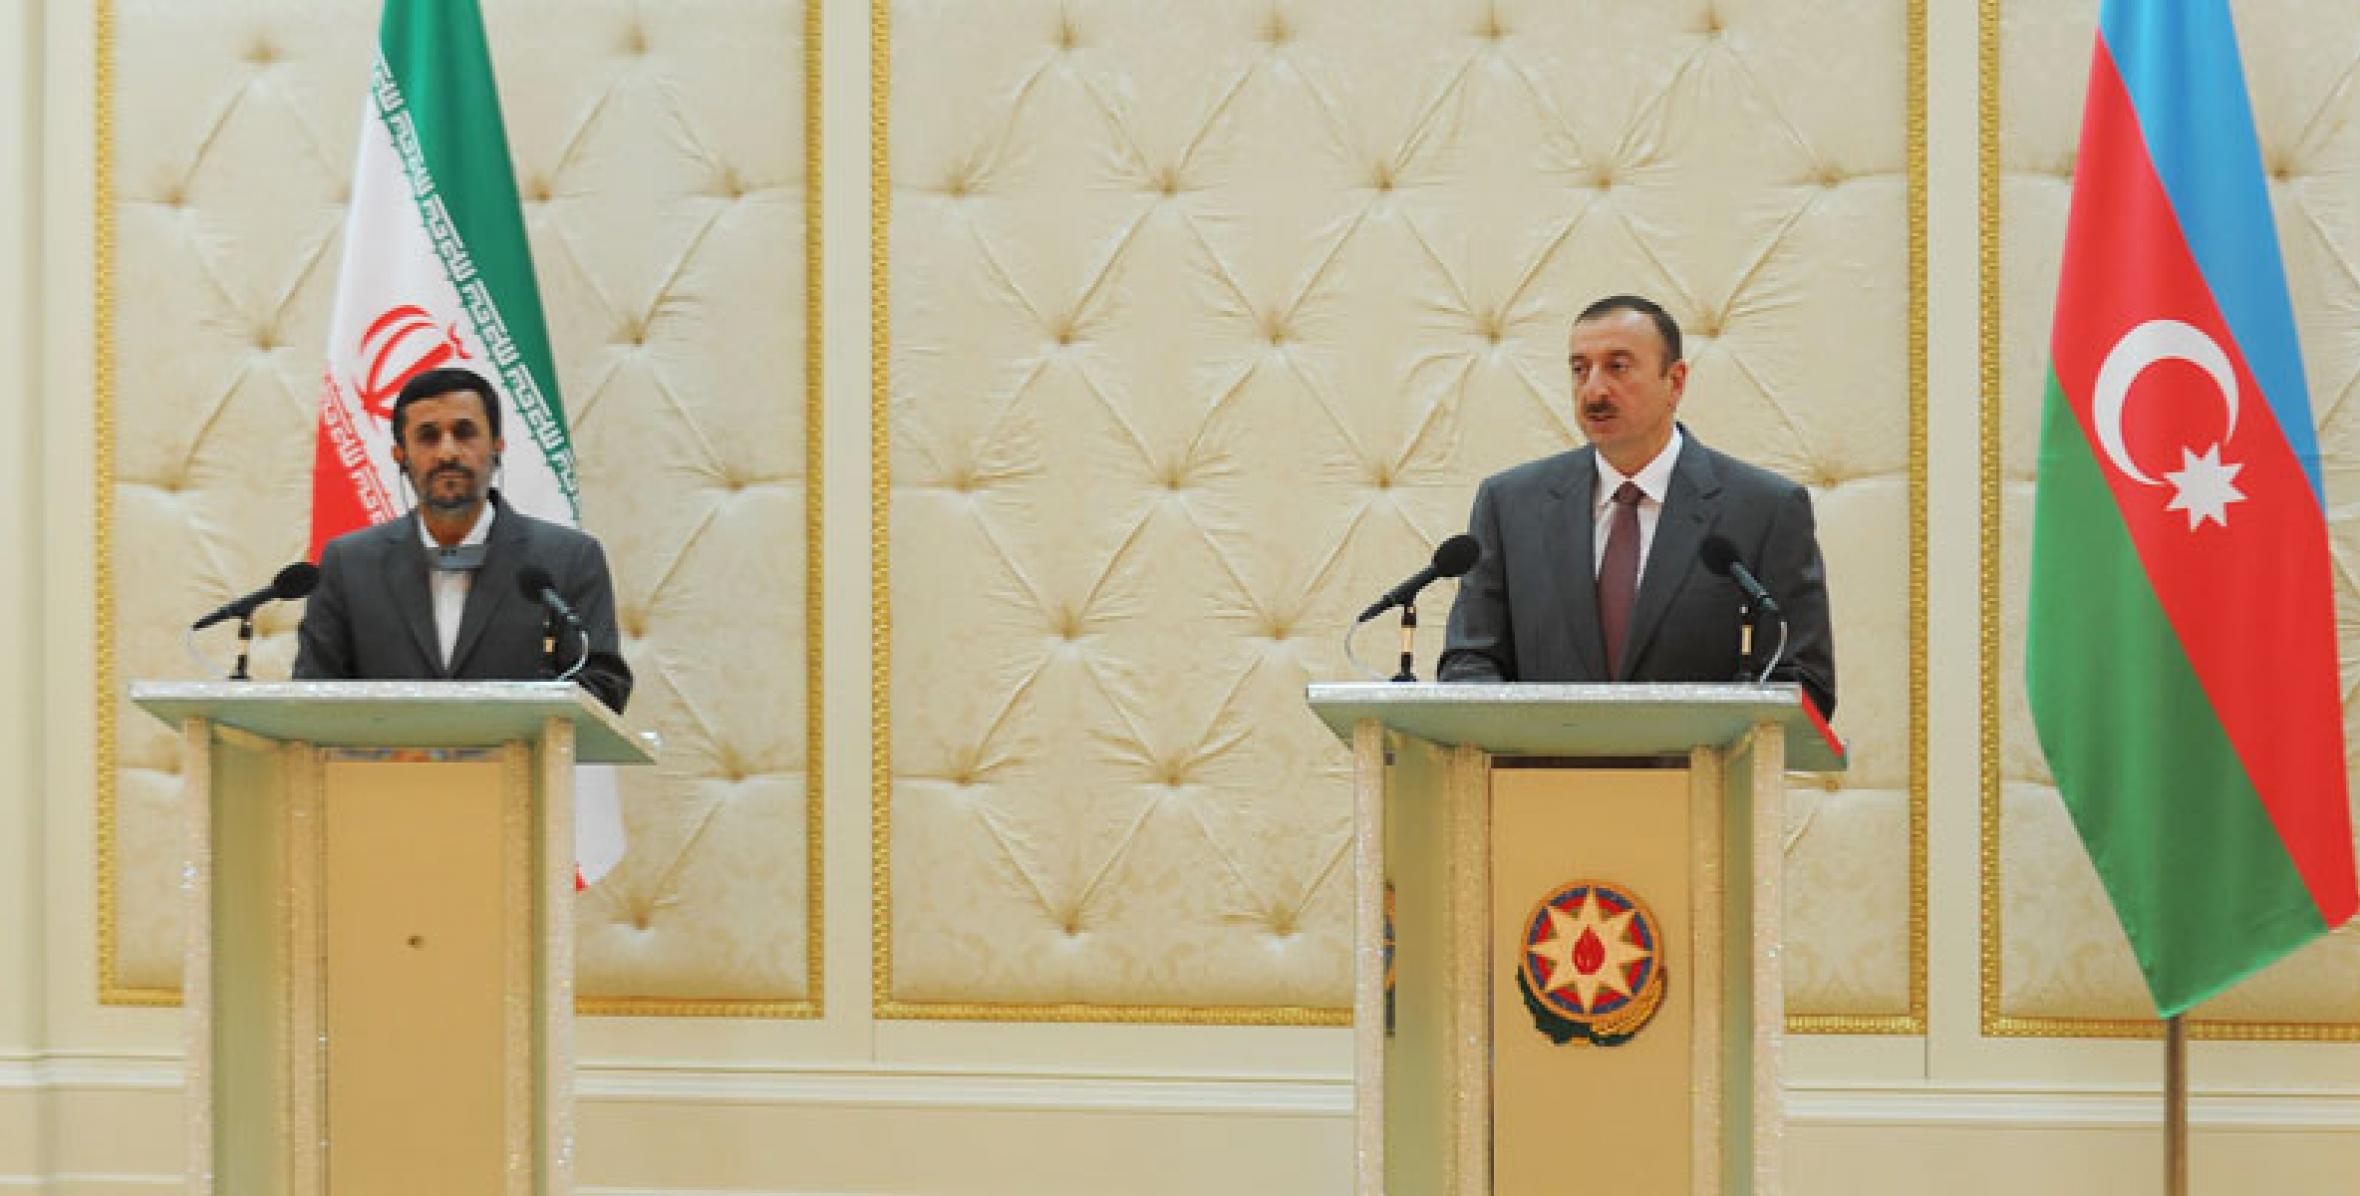 Ilham Aliyev and Iranian President Mahmoud Ahmedinejad made press statements